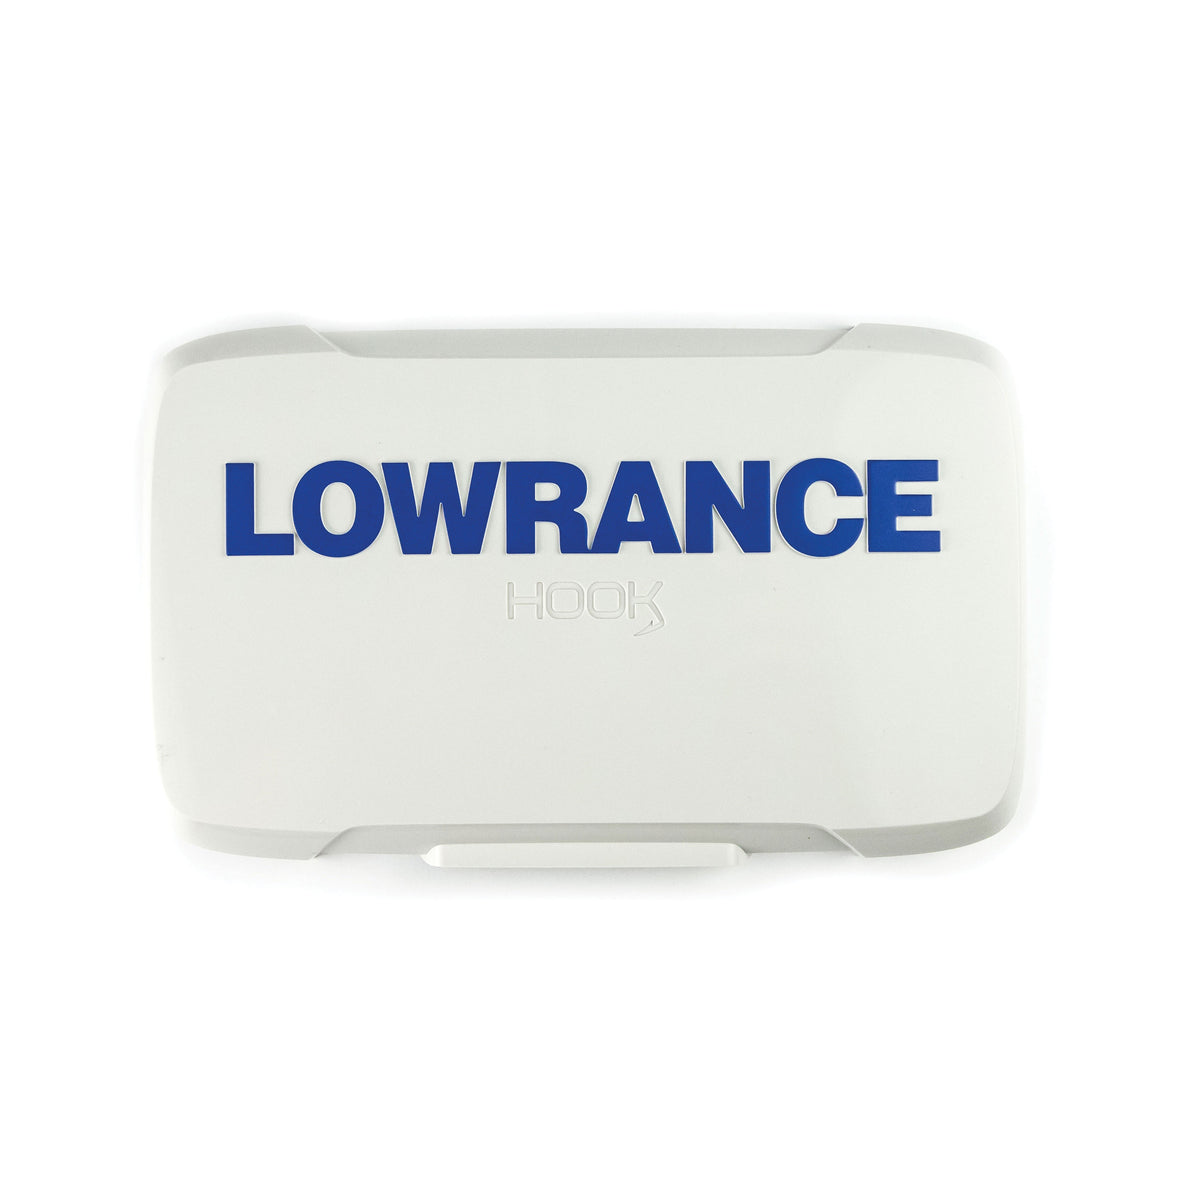 Lowrance 000-14176-001 HOOK2 Suncover - 9"